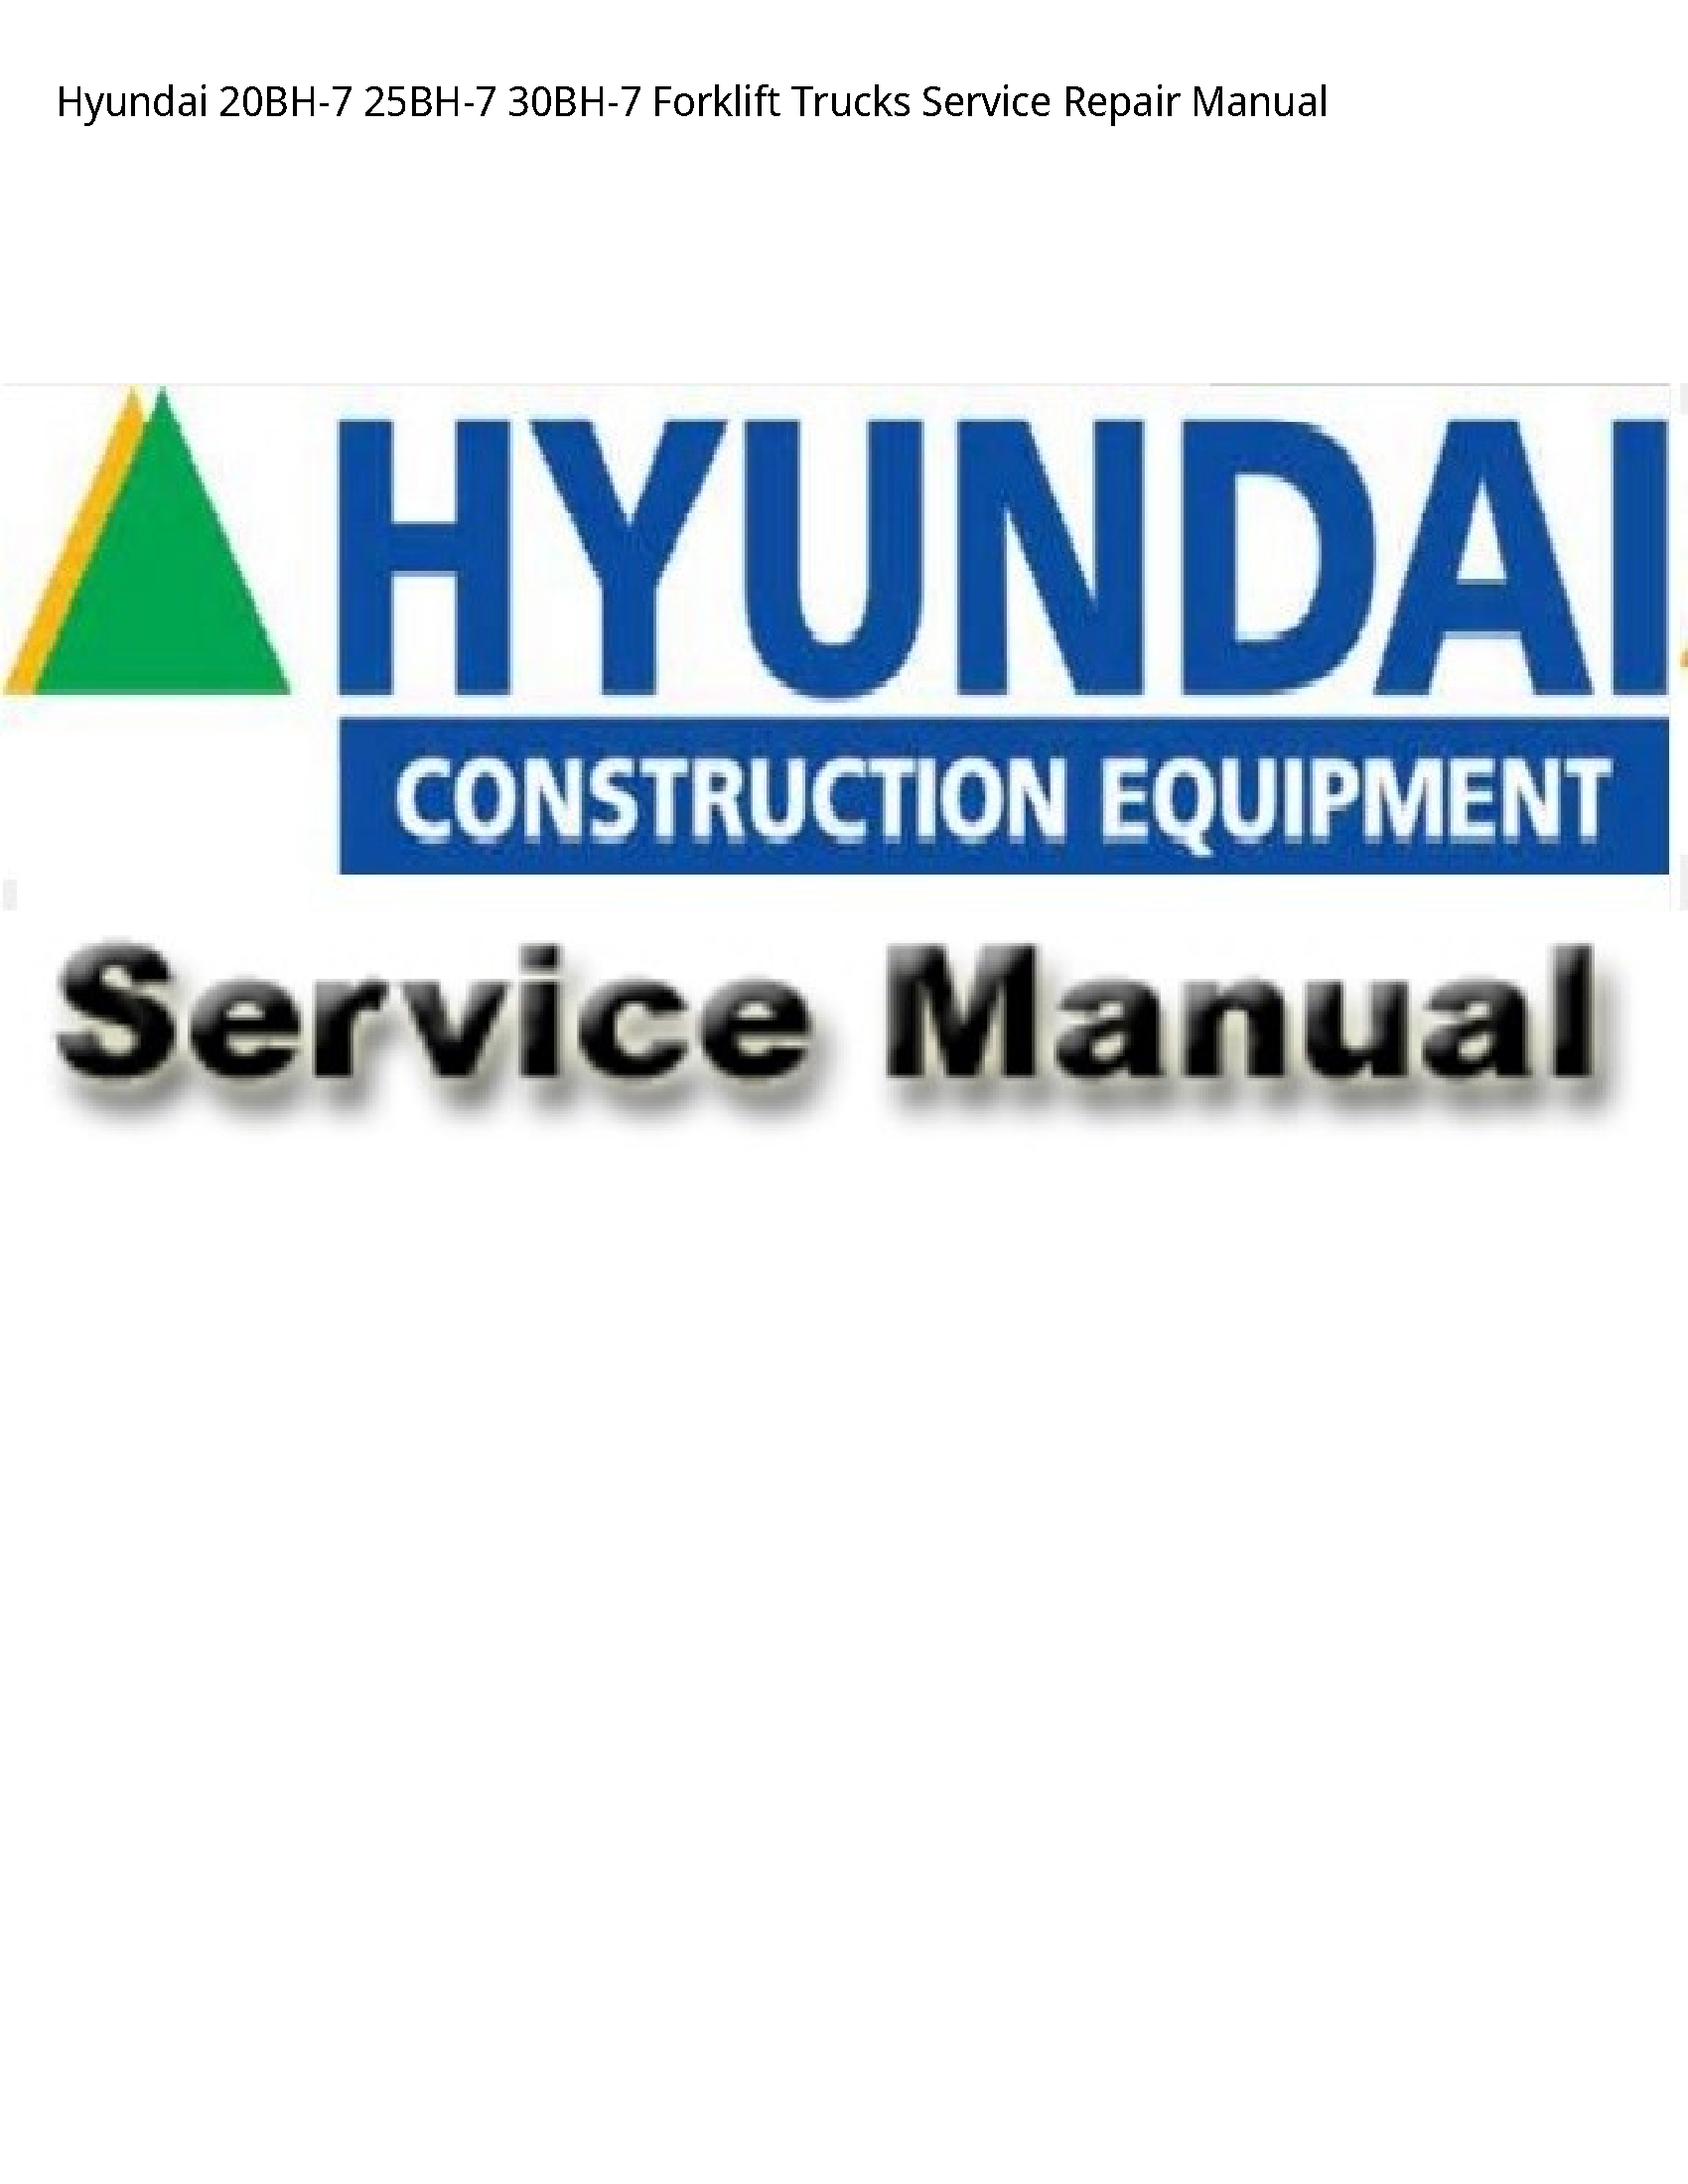 Hyundai 20BH-7 Forklift Trucks manual